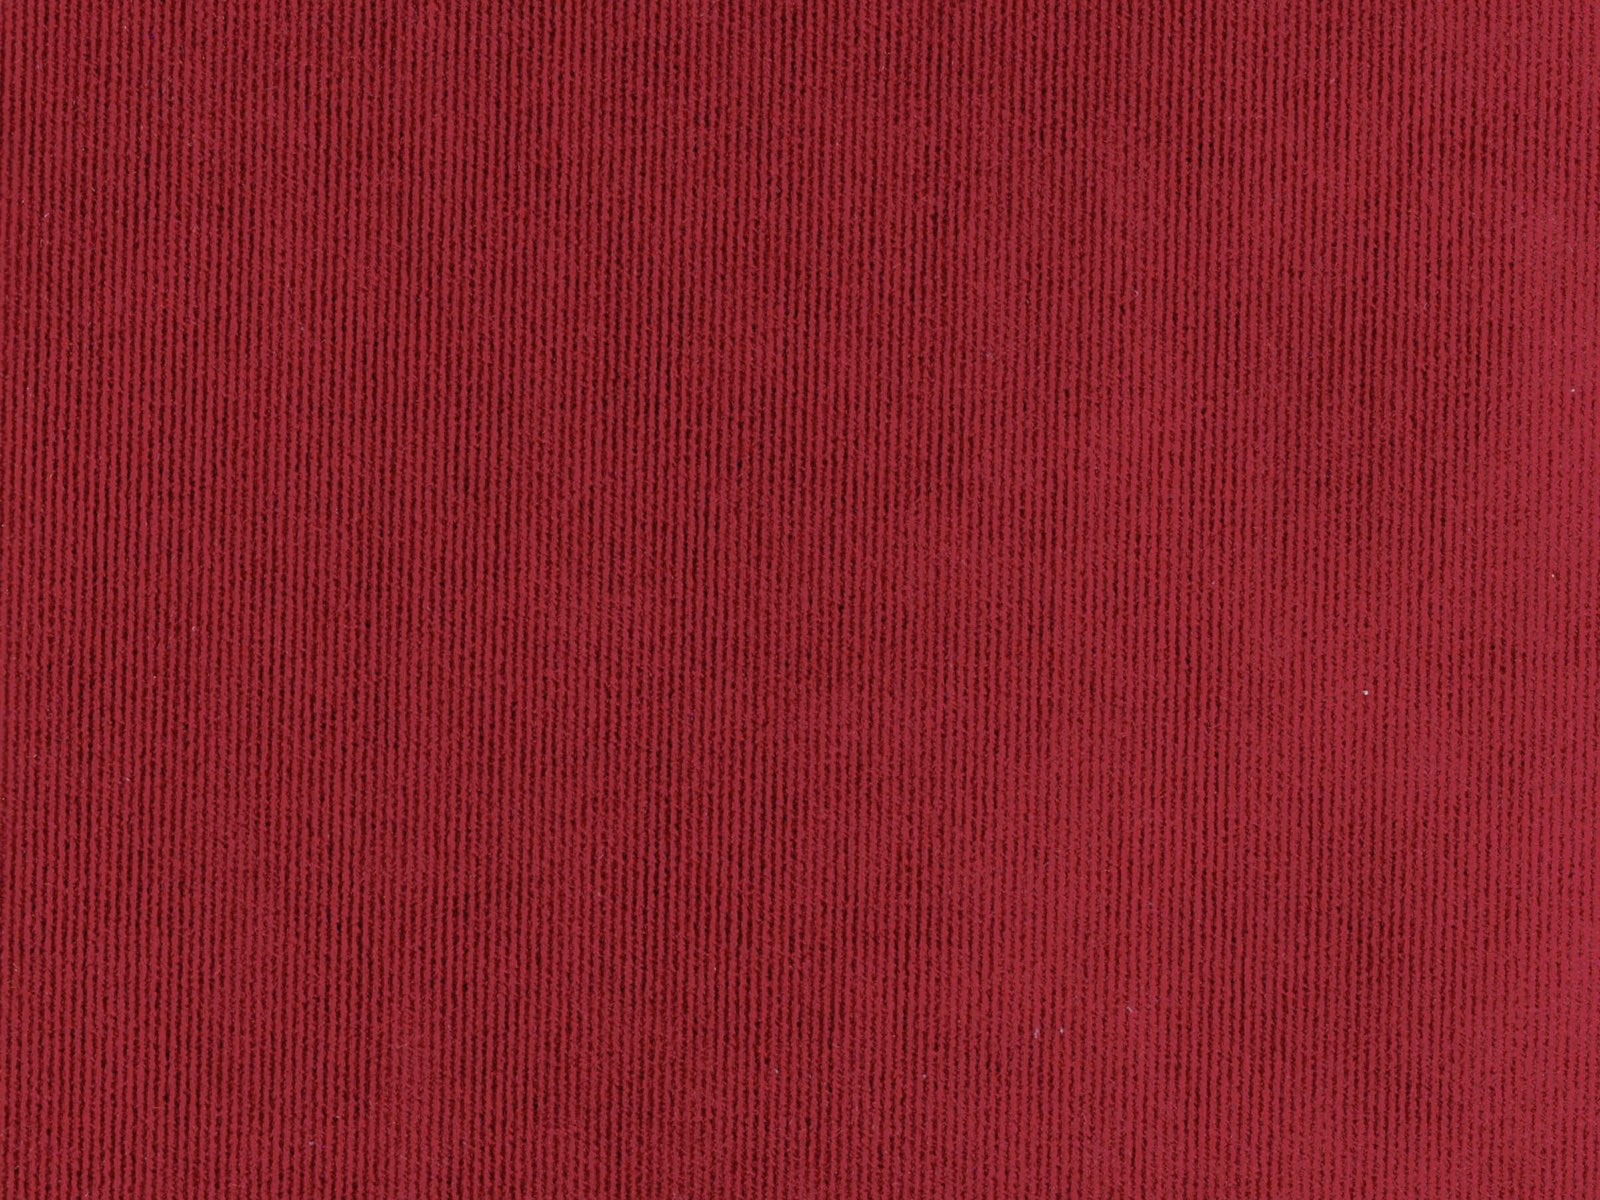 Dolce Fabric Samples - Rydan Interiors